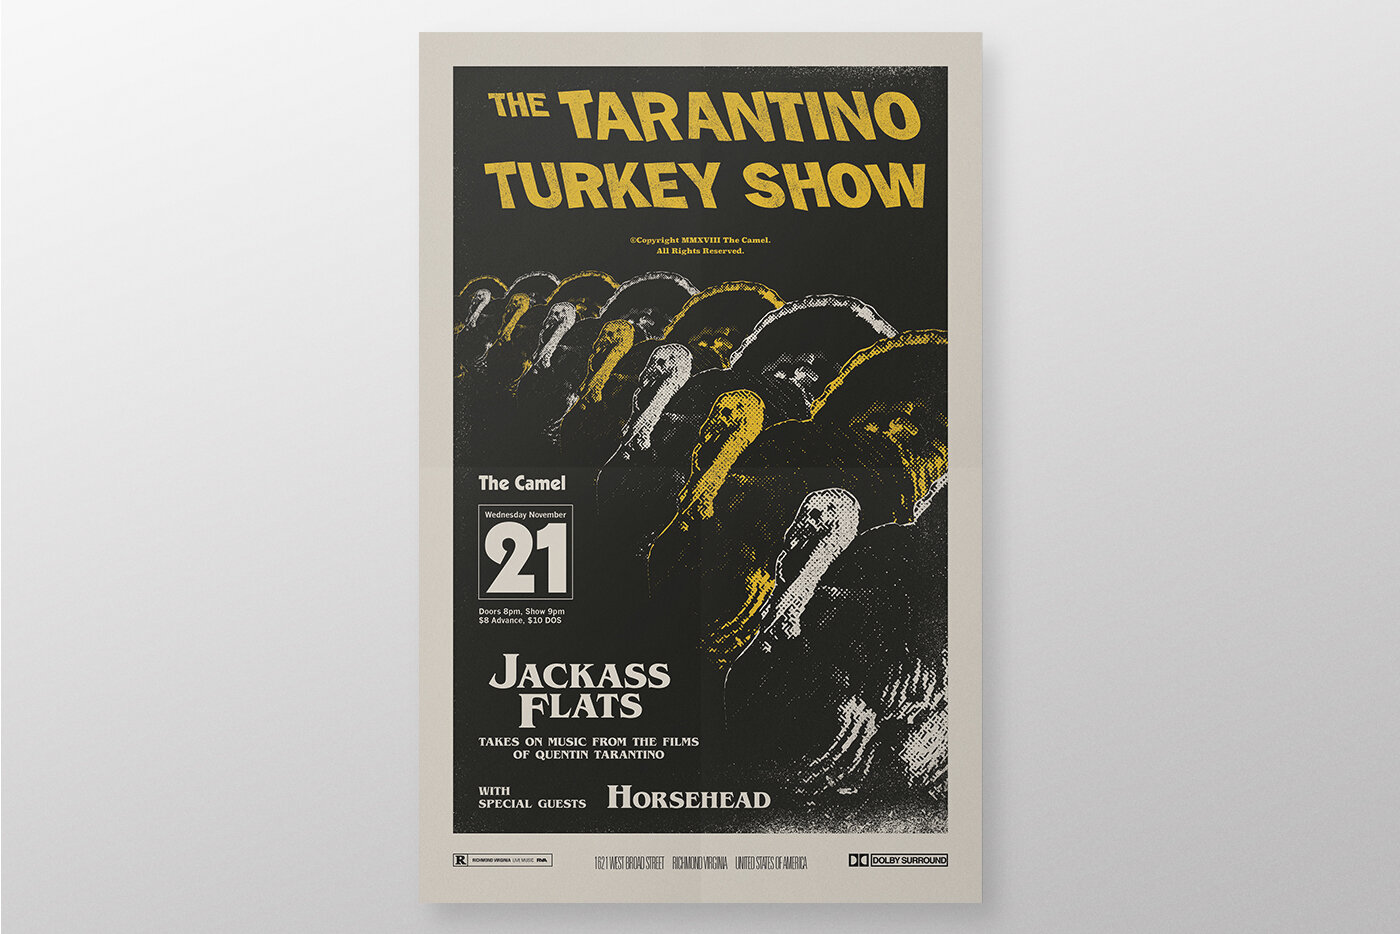 The Tarrantino Turkey Show Concert Poster